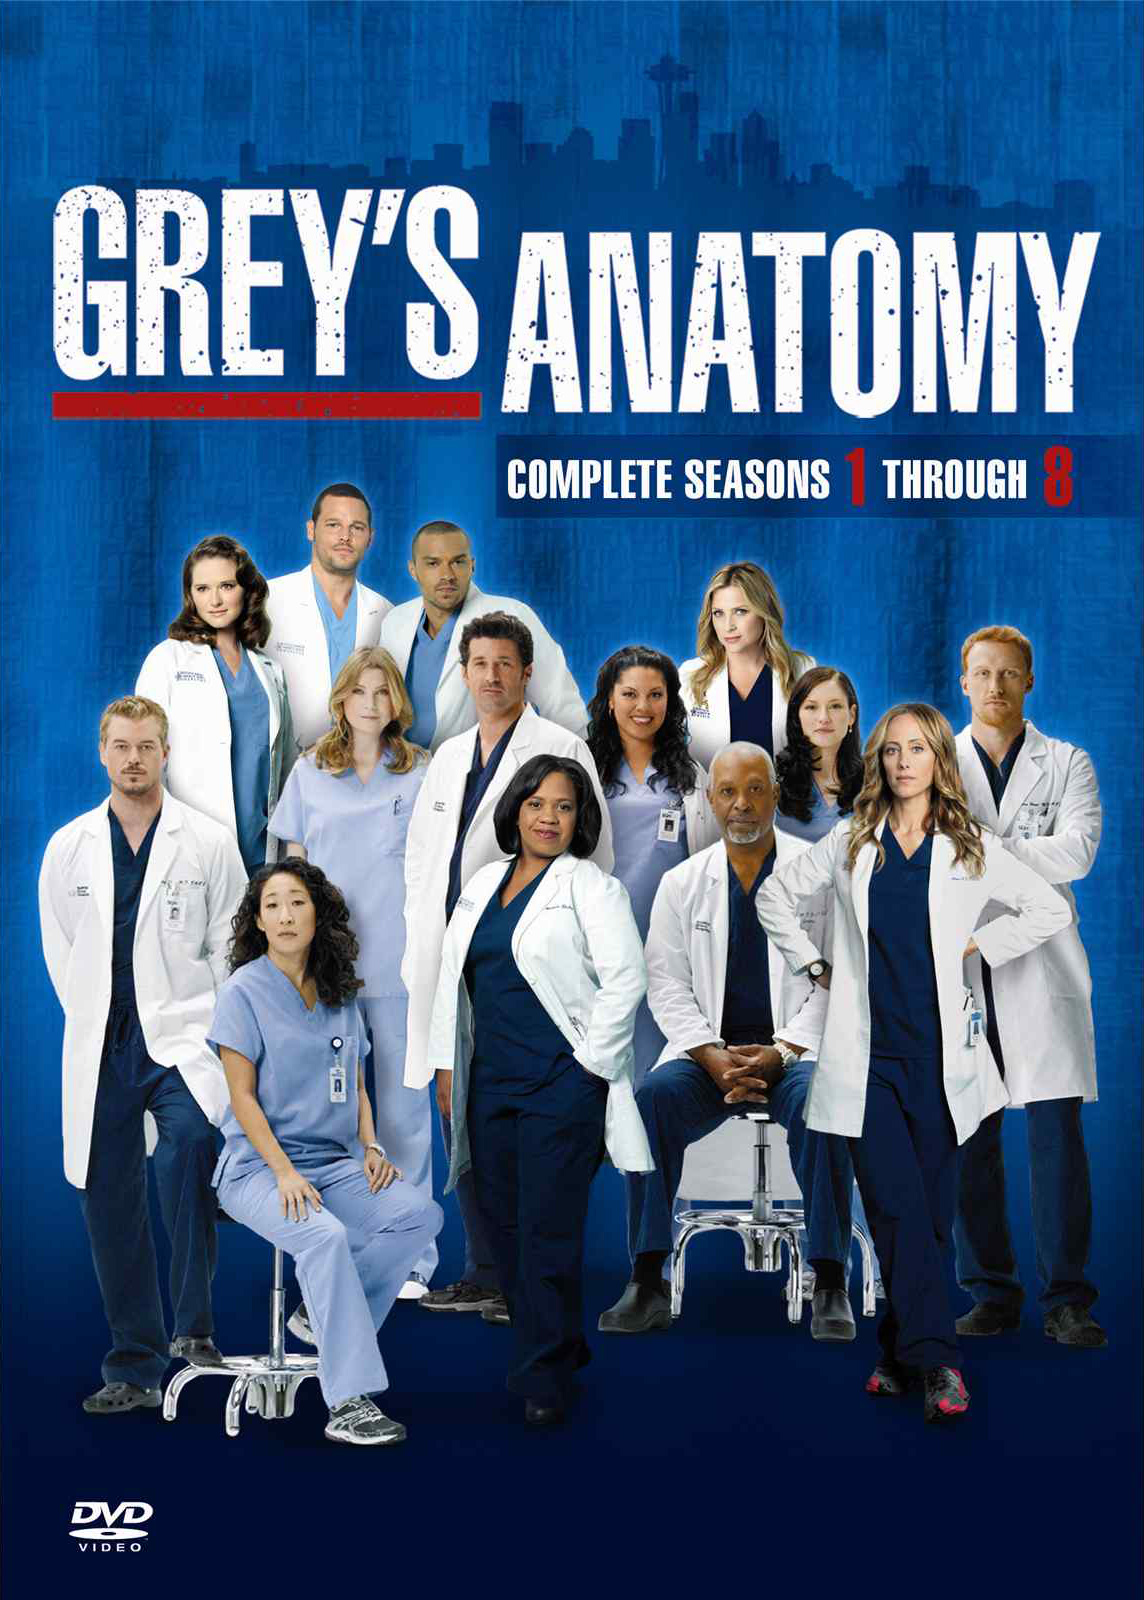 Greys Anatomy Full Episodes Watch Season 2 Online - ABCcom